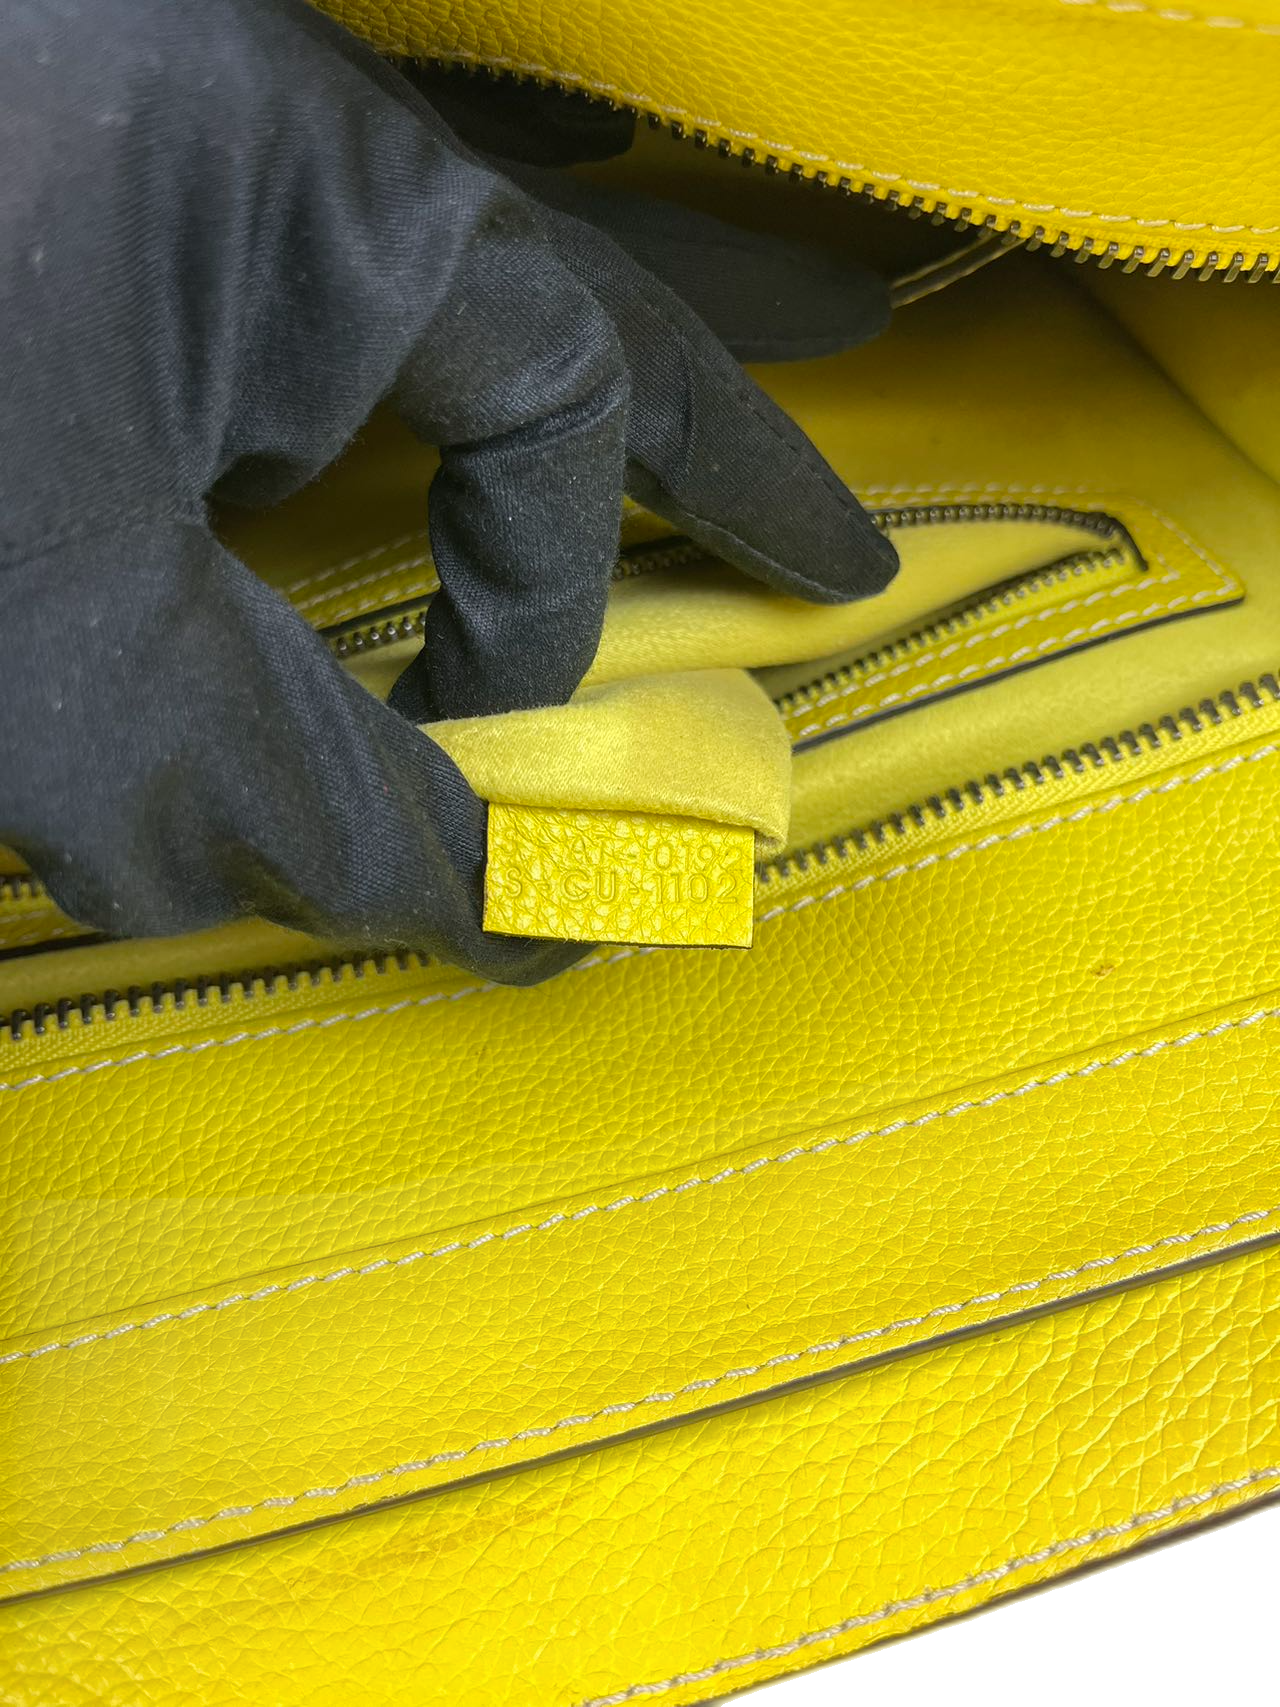 Preloved Celine Yellow Leather Mini Luggage Totes Shoulder Bag